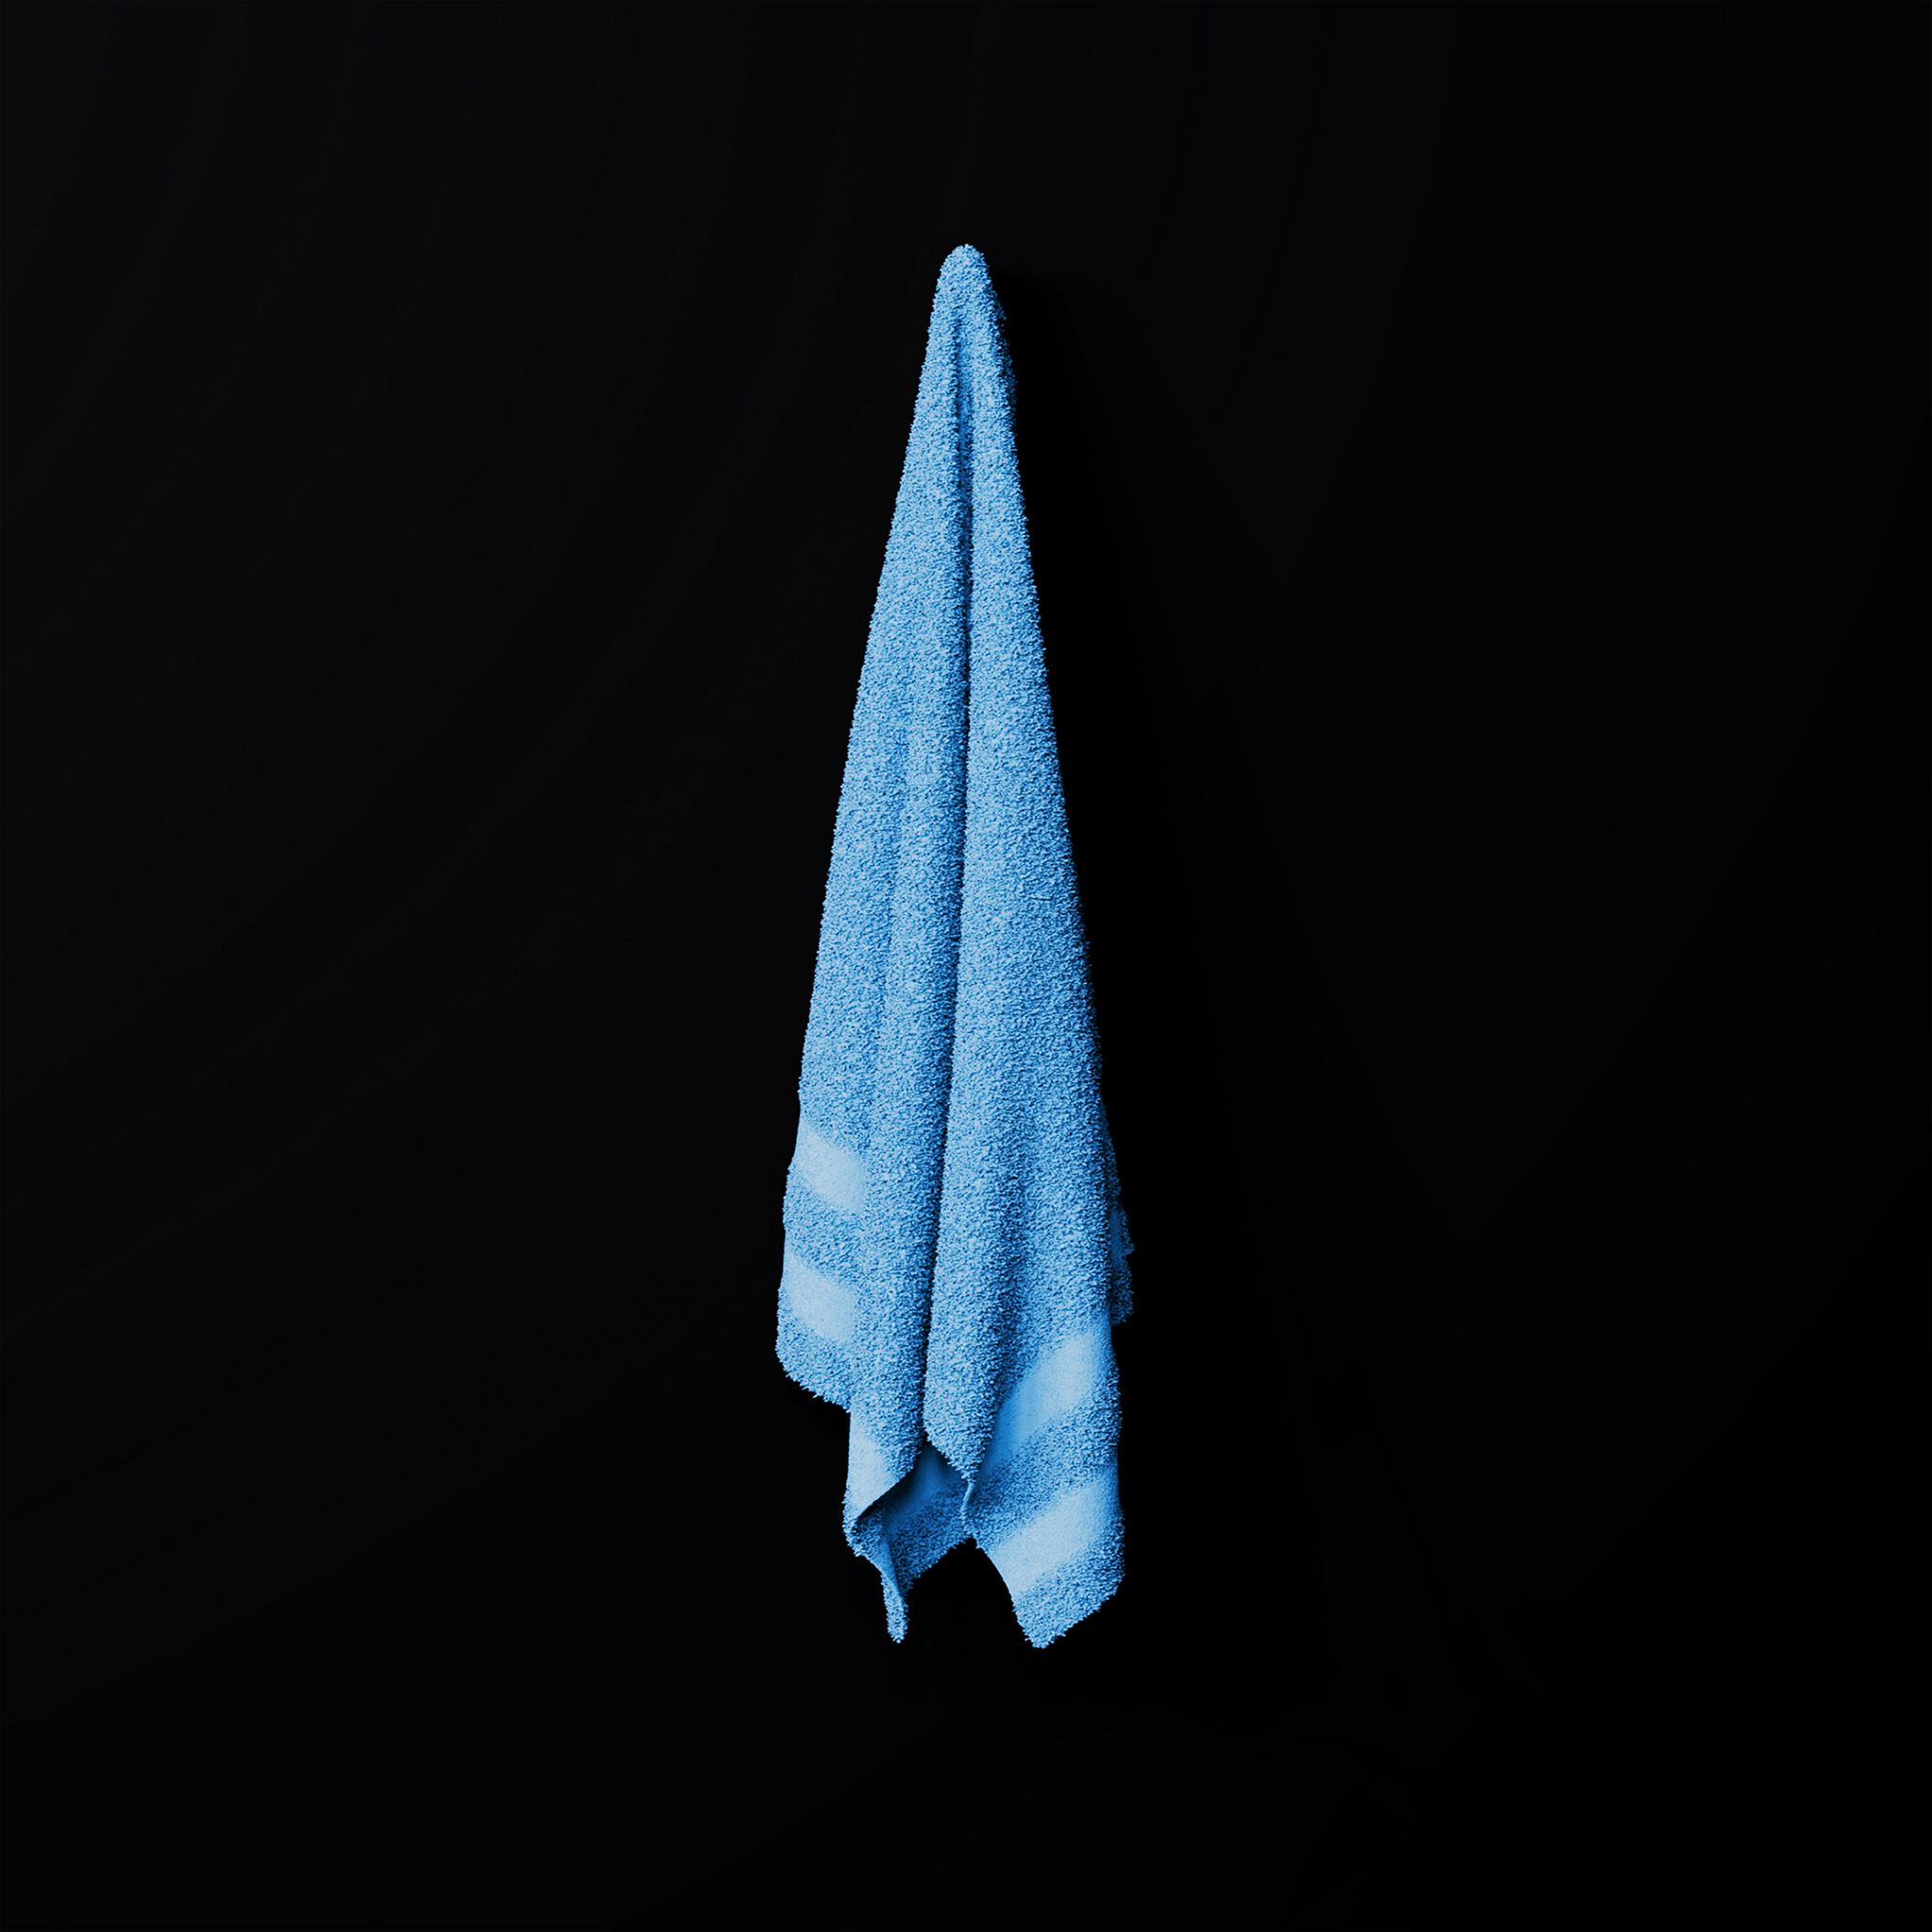 Towel Blue Minimal Dark Illustration Art iPad Air wallpaper 